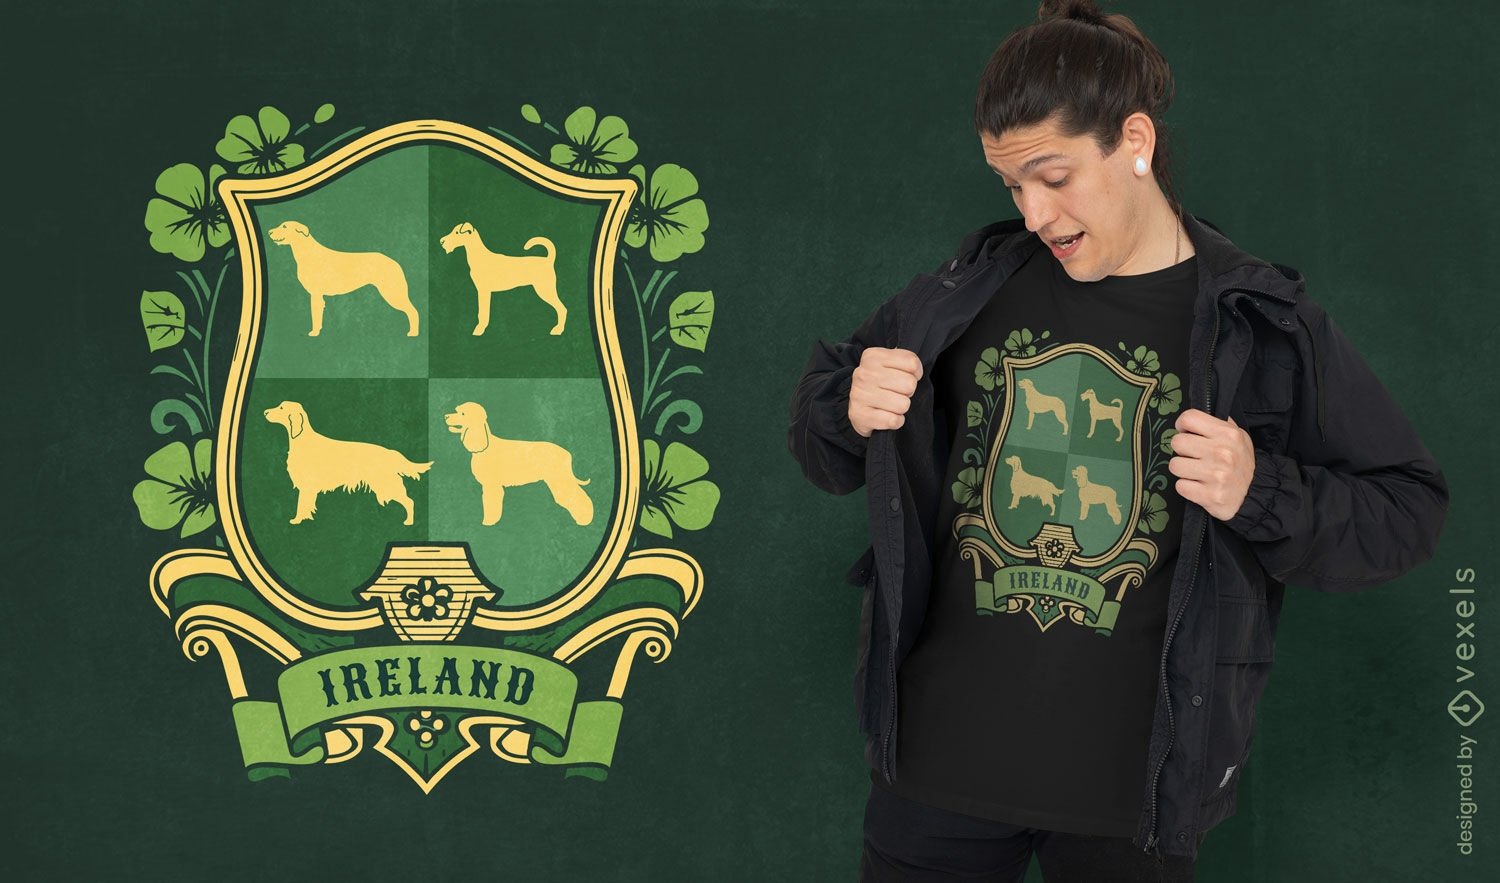 Diseño de camiseta con escudo de armas irlandés.